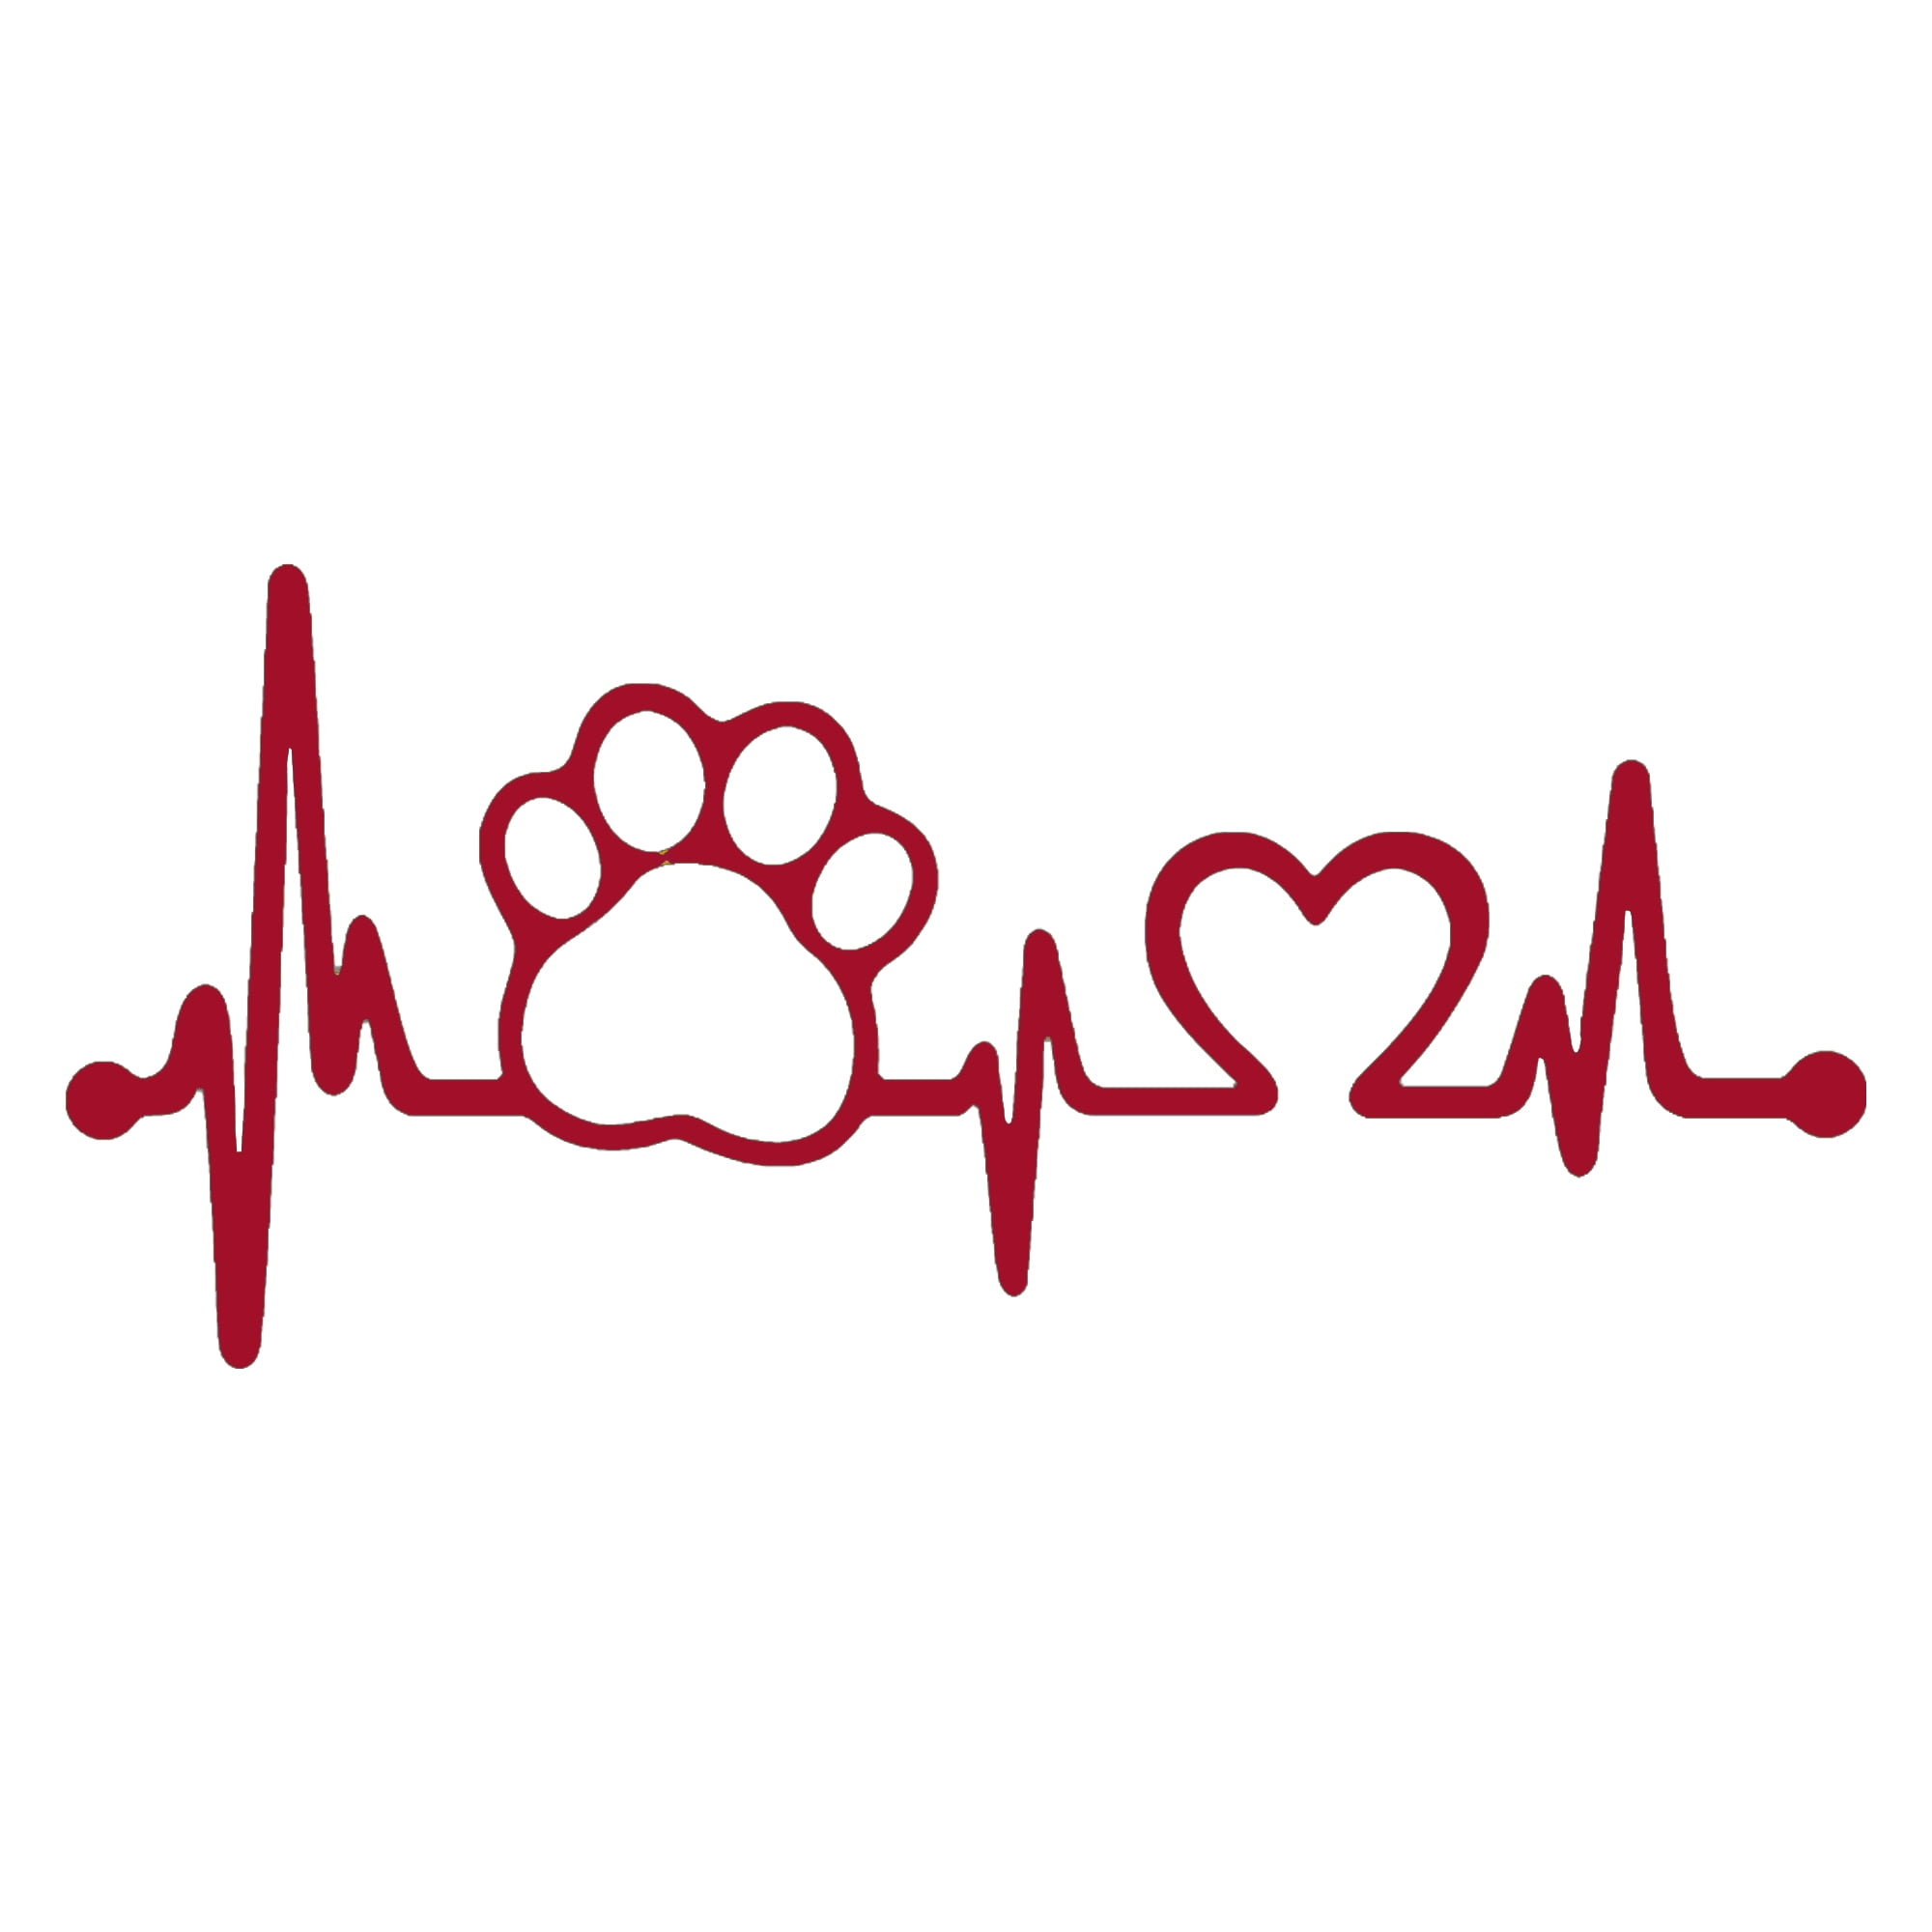 Heiheiup Dog Window Bumper Pet With Heart Decal Sticker Car